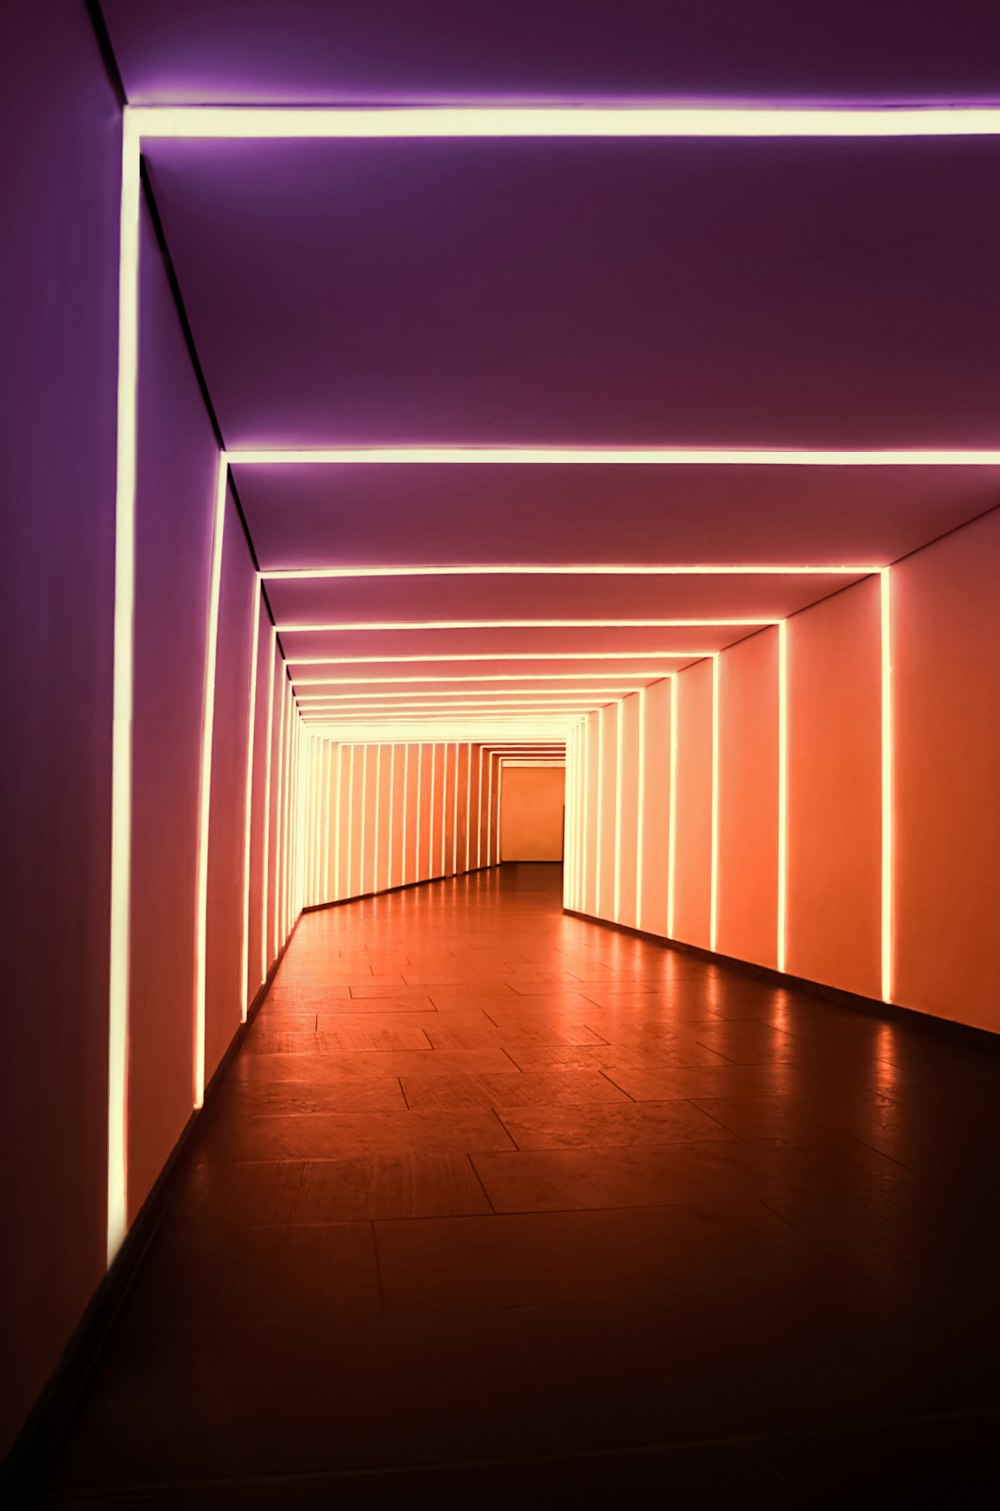 Un largo pasillo con muchas luces